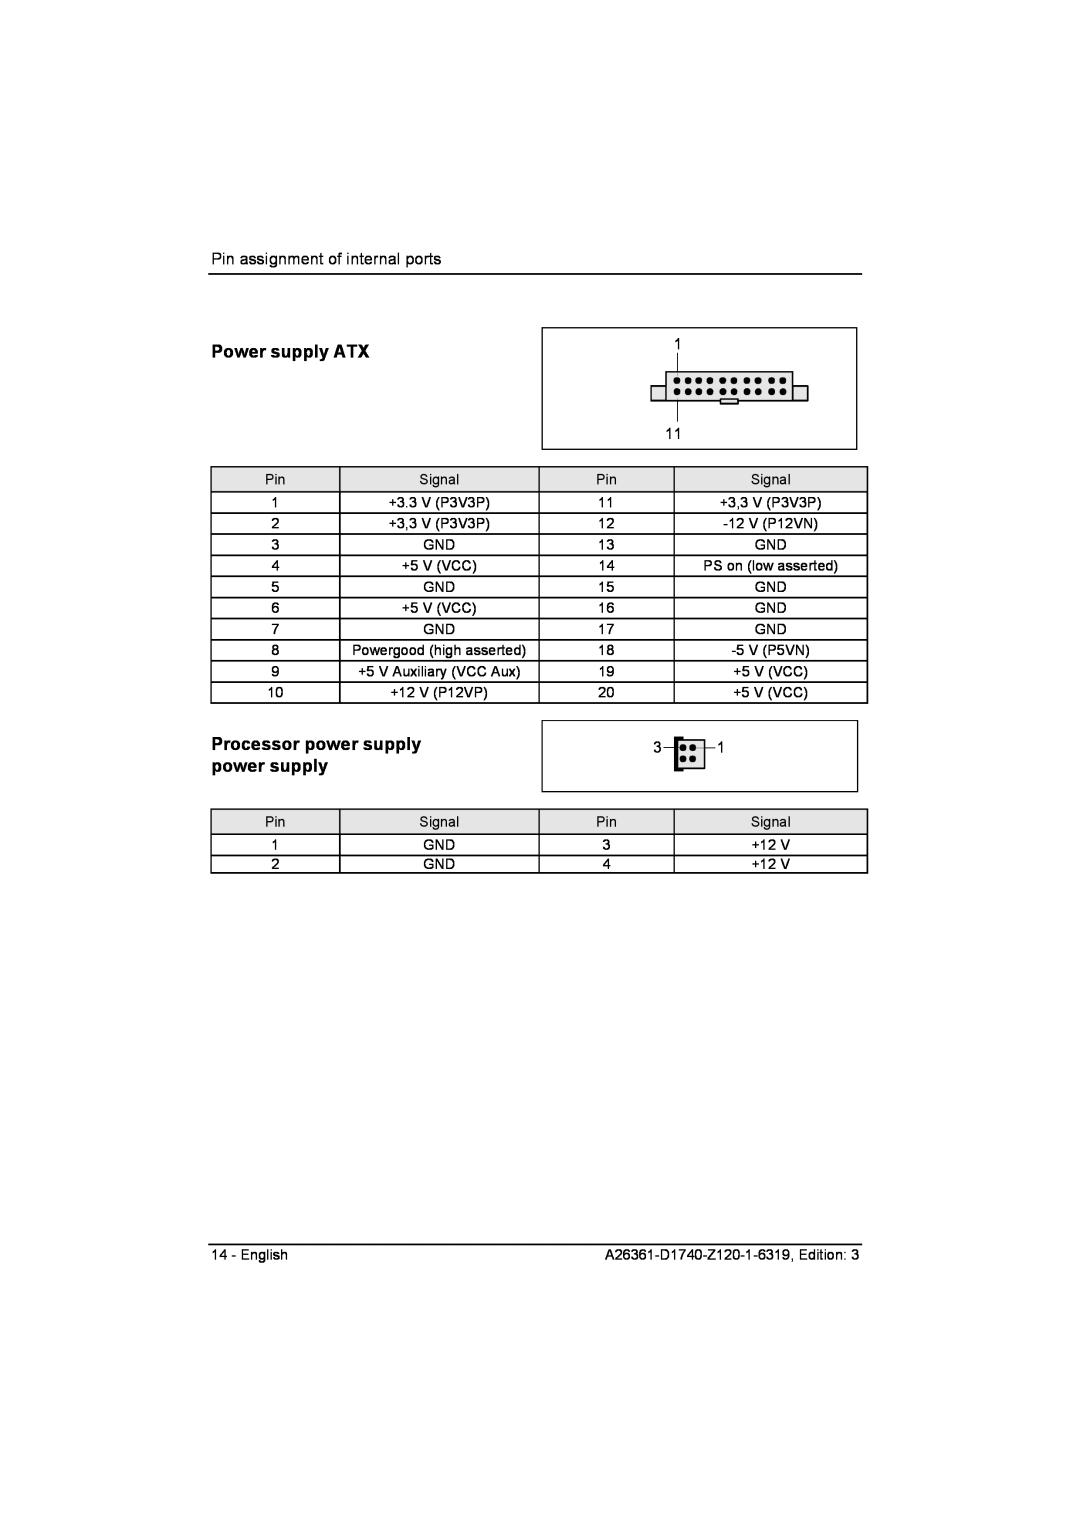 Fujitsu D1740 technical manual Power supply ATX, Processor power supply power supply, Pin assignment of internal ports 